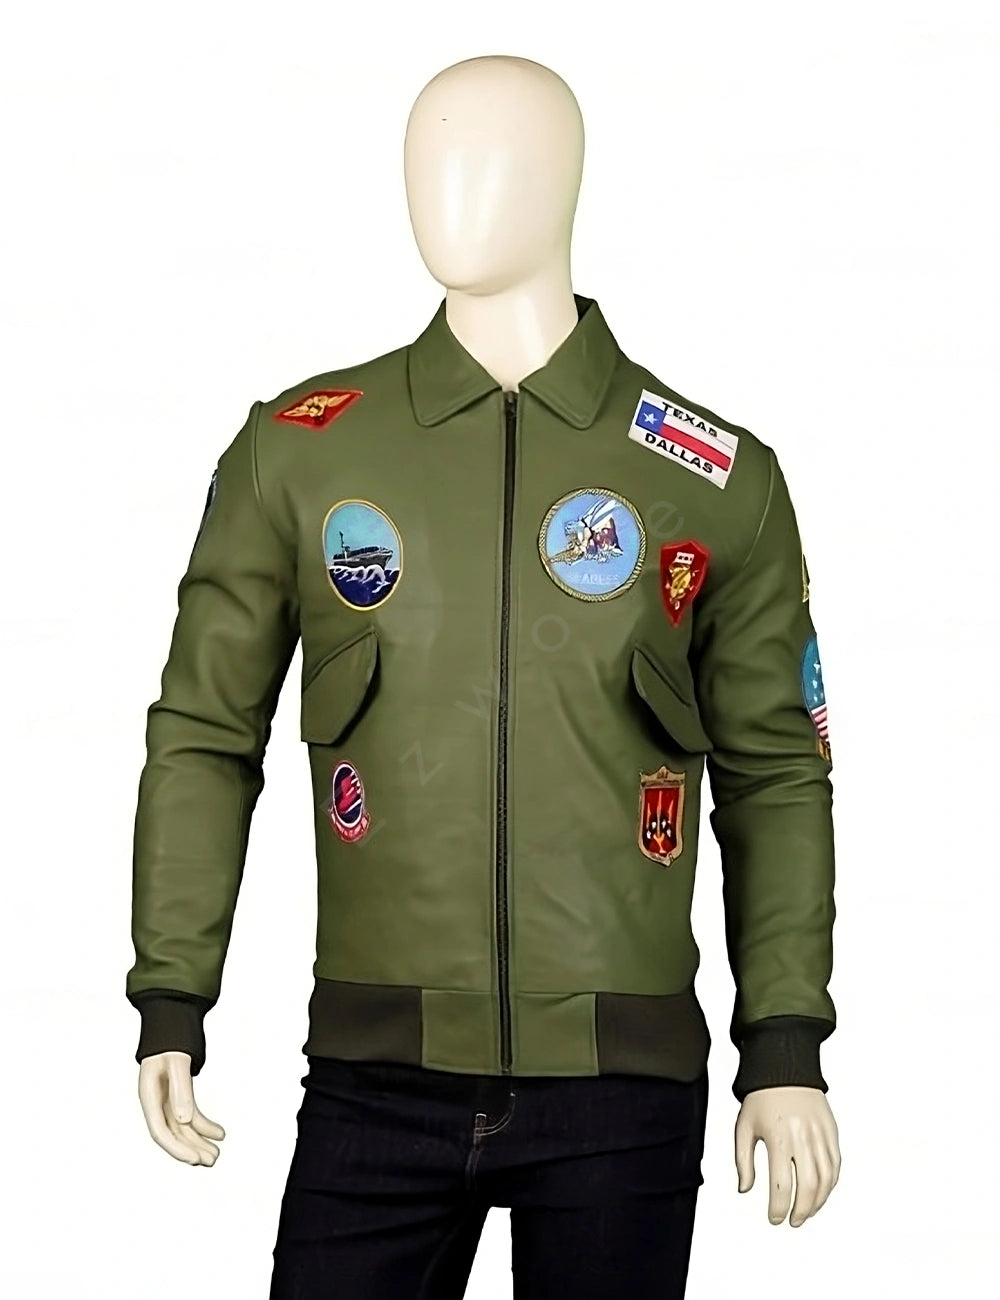 Top Gun 2 Jacket